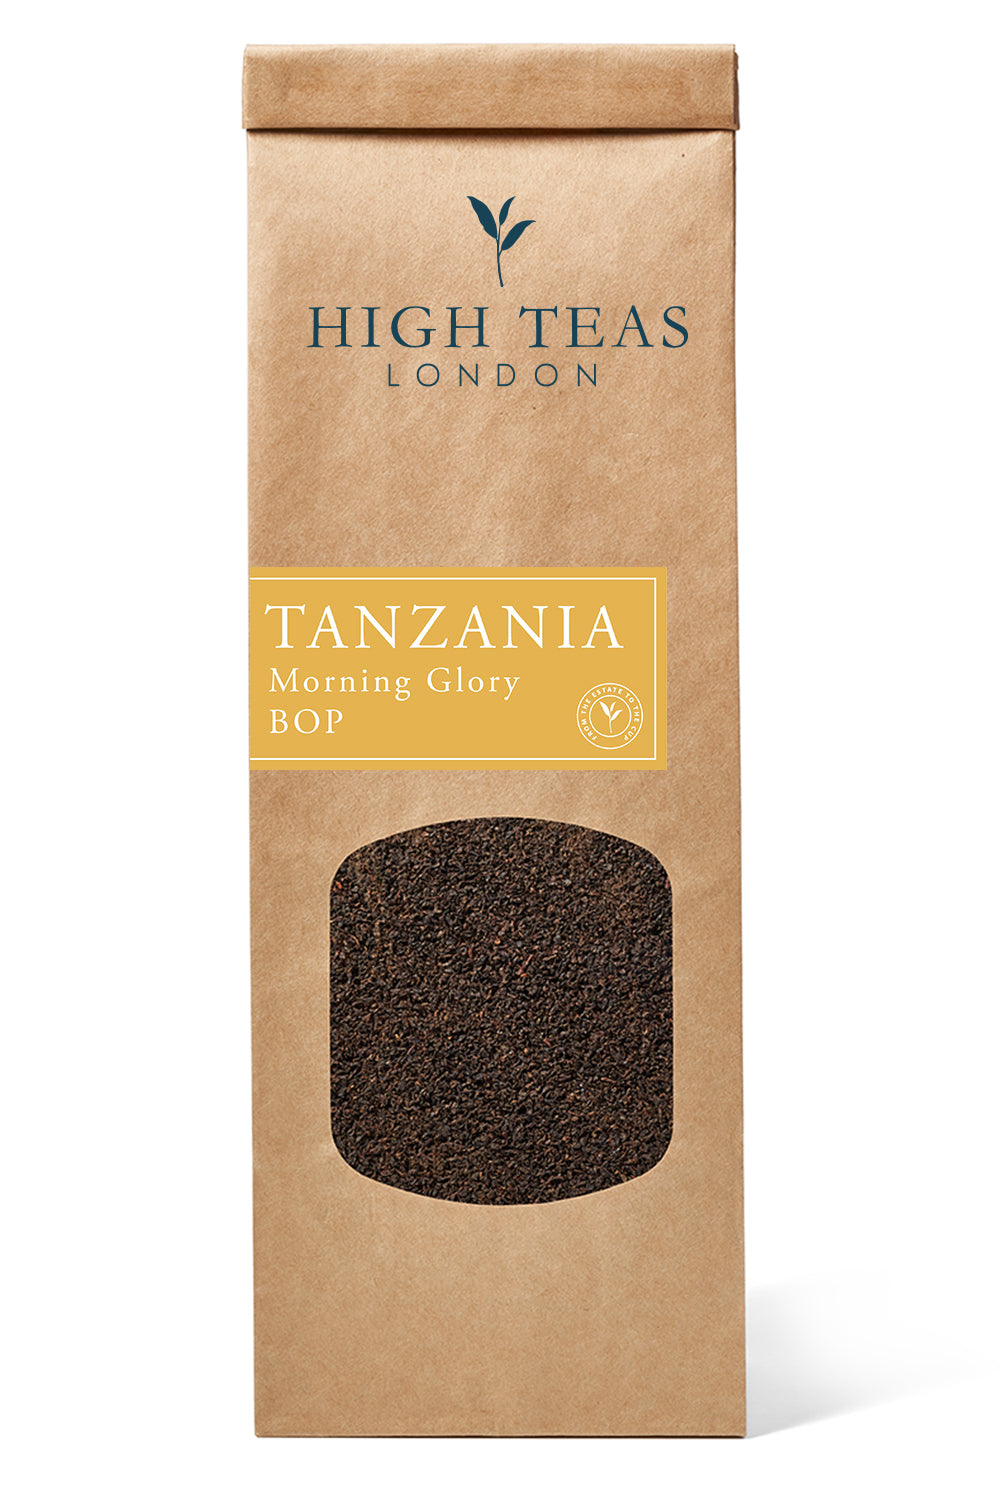 Tanzania BOP (CTC) - "Morning Glory"-50g-Loose Leaf Tea-High Teas